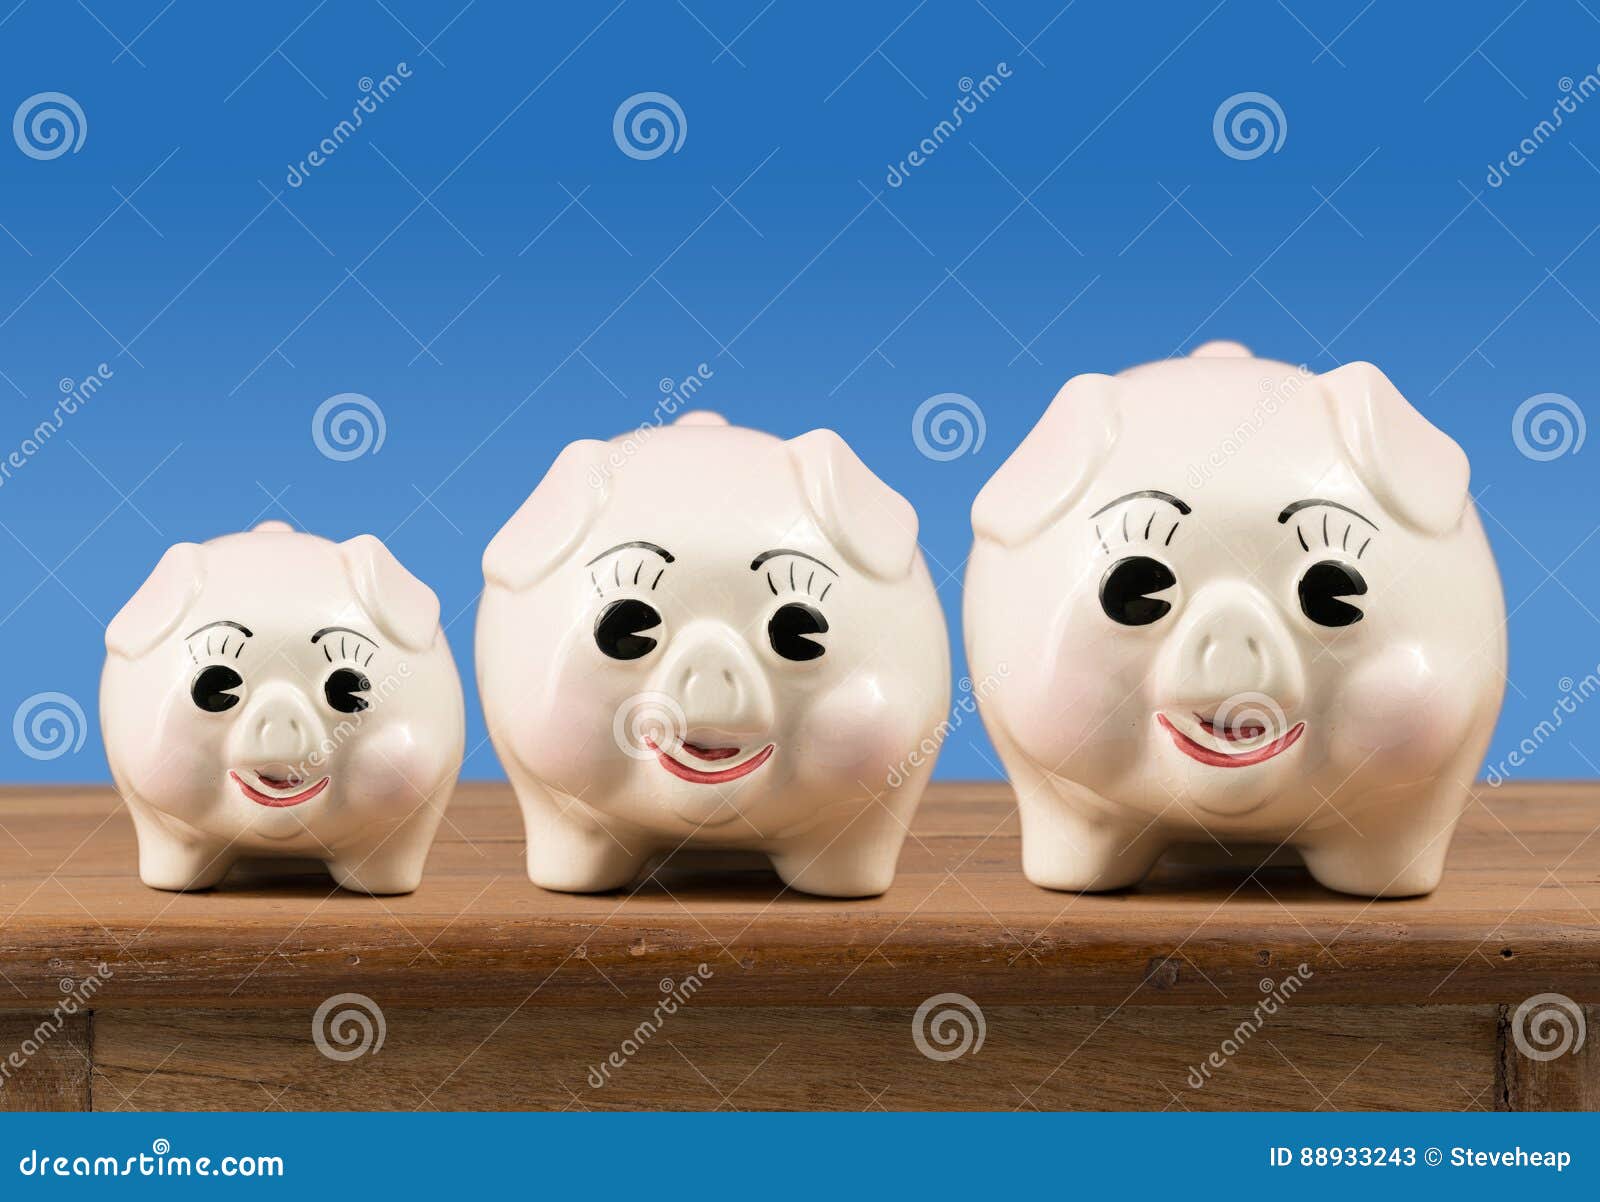 small medium and large piggy banks on shelf